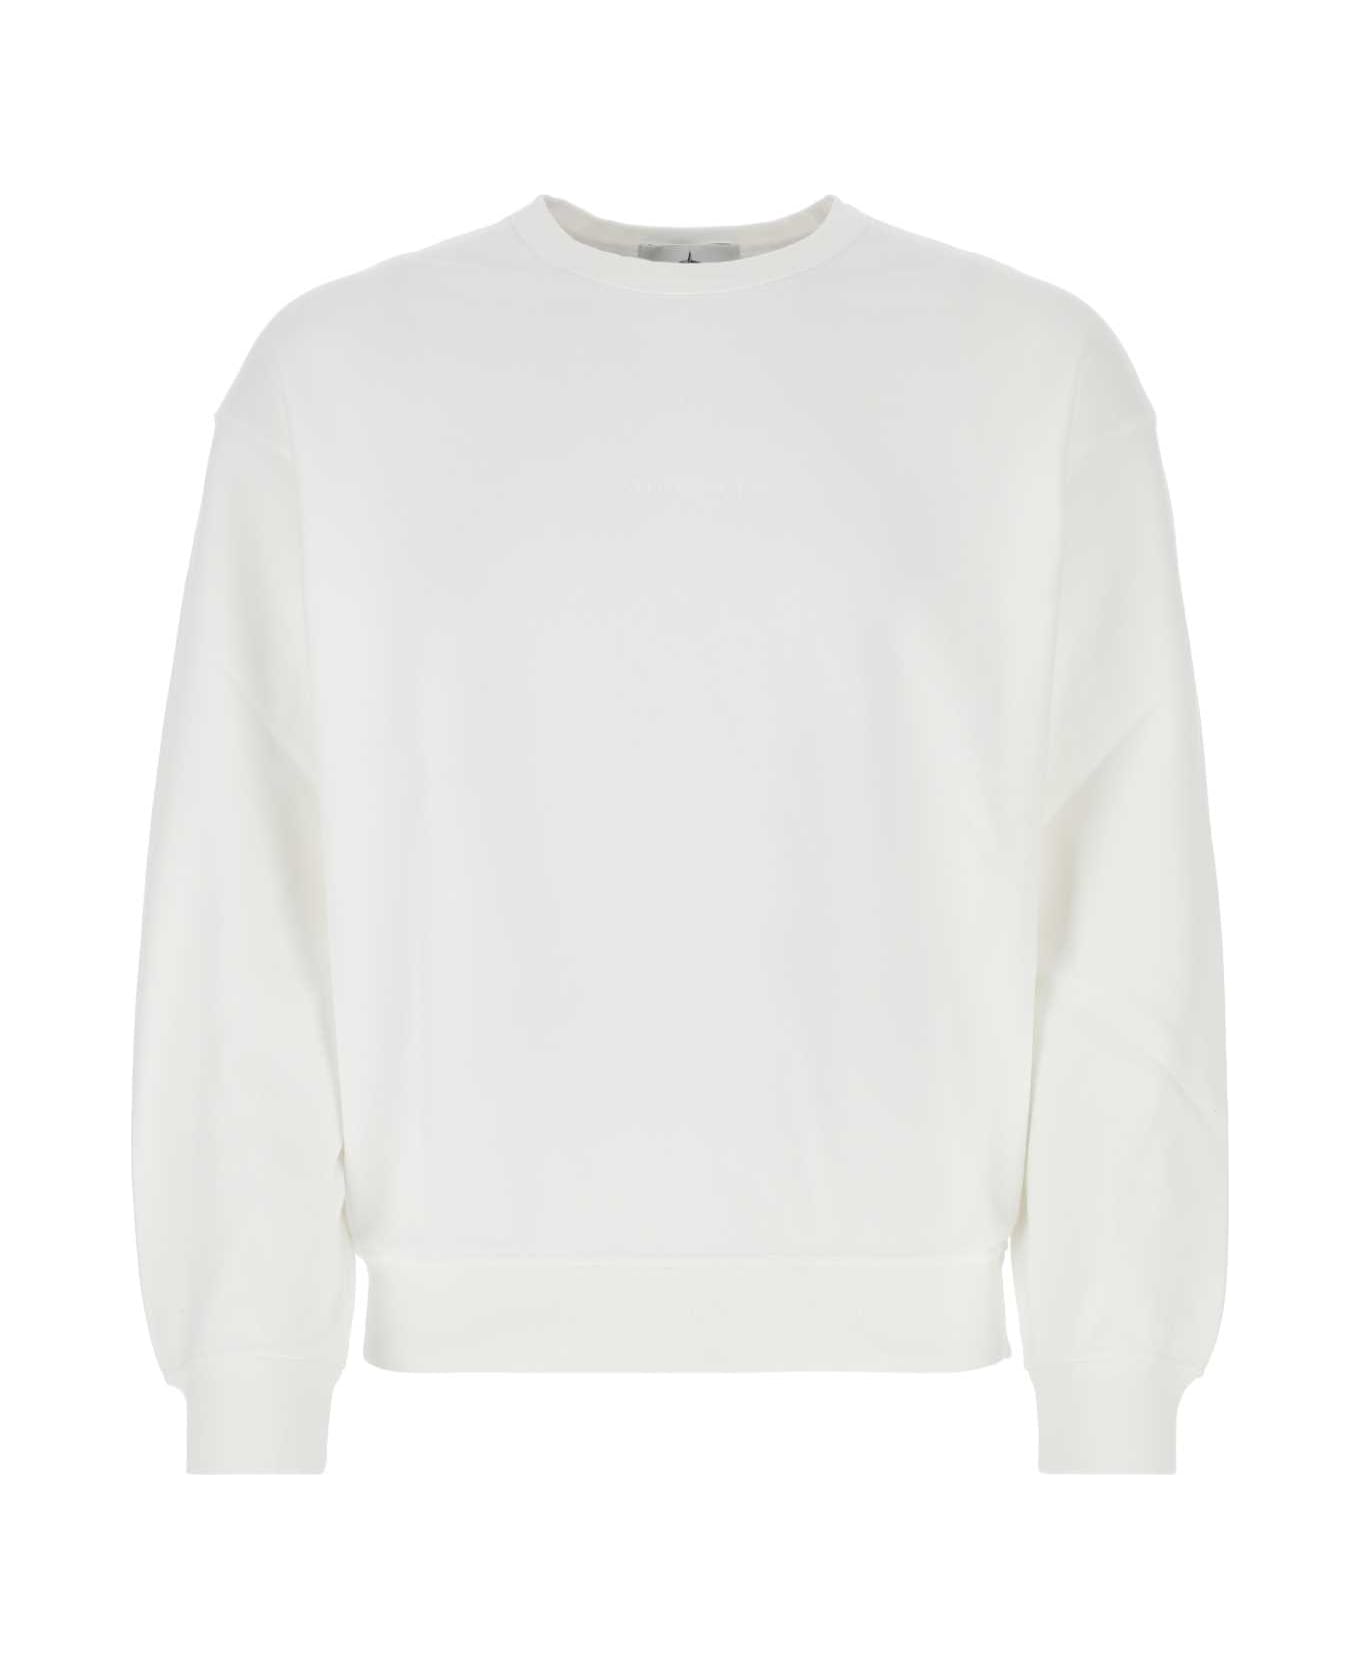 Stone Island White Cotton Sweatshirt - V0001 フリース